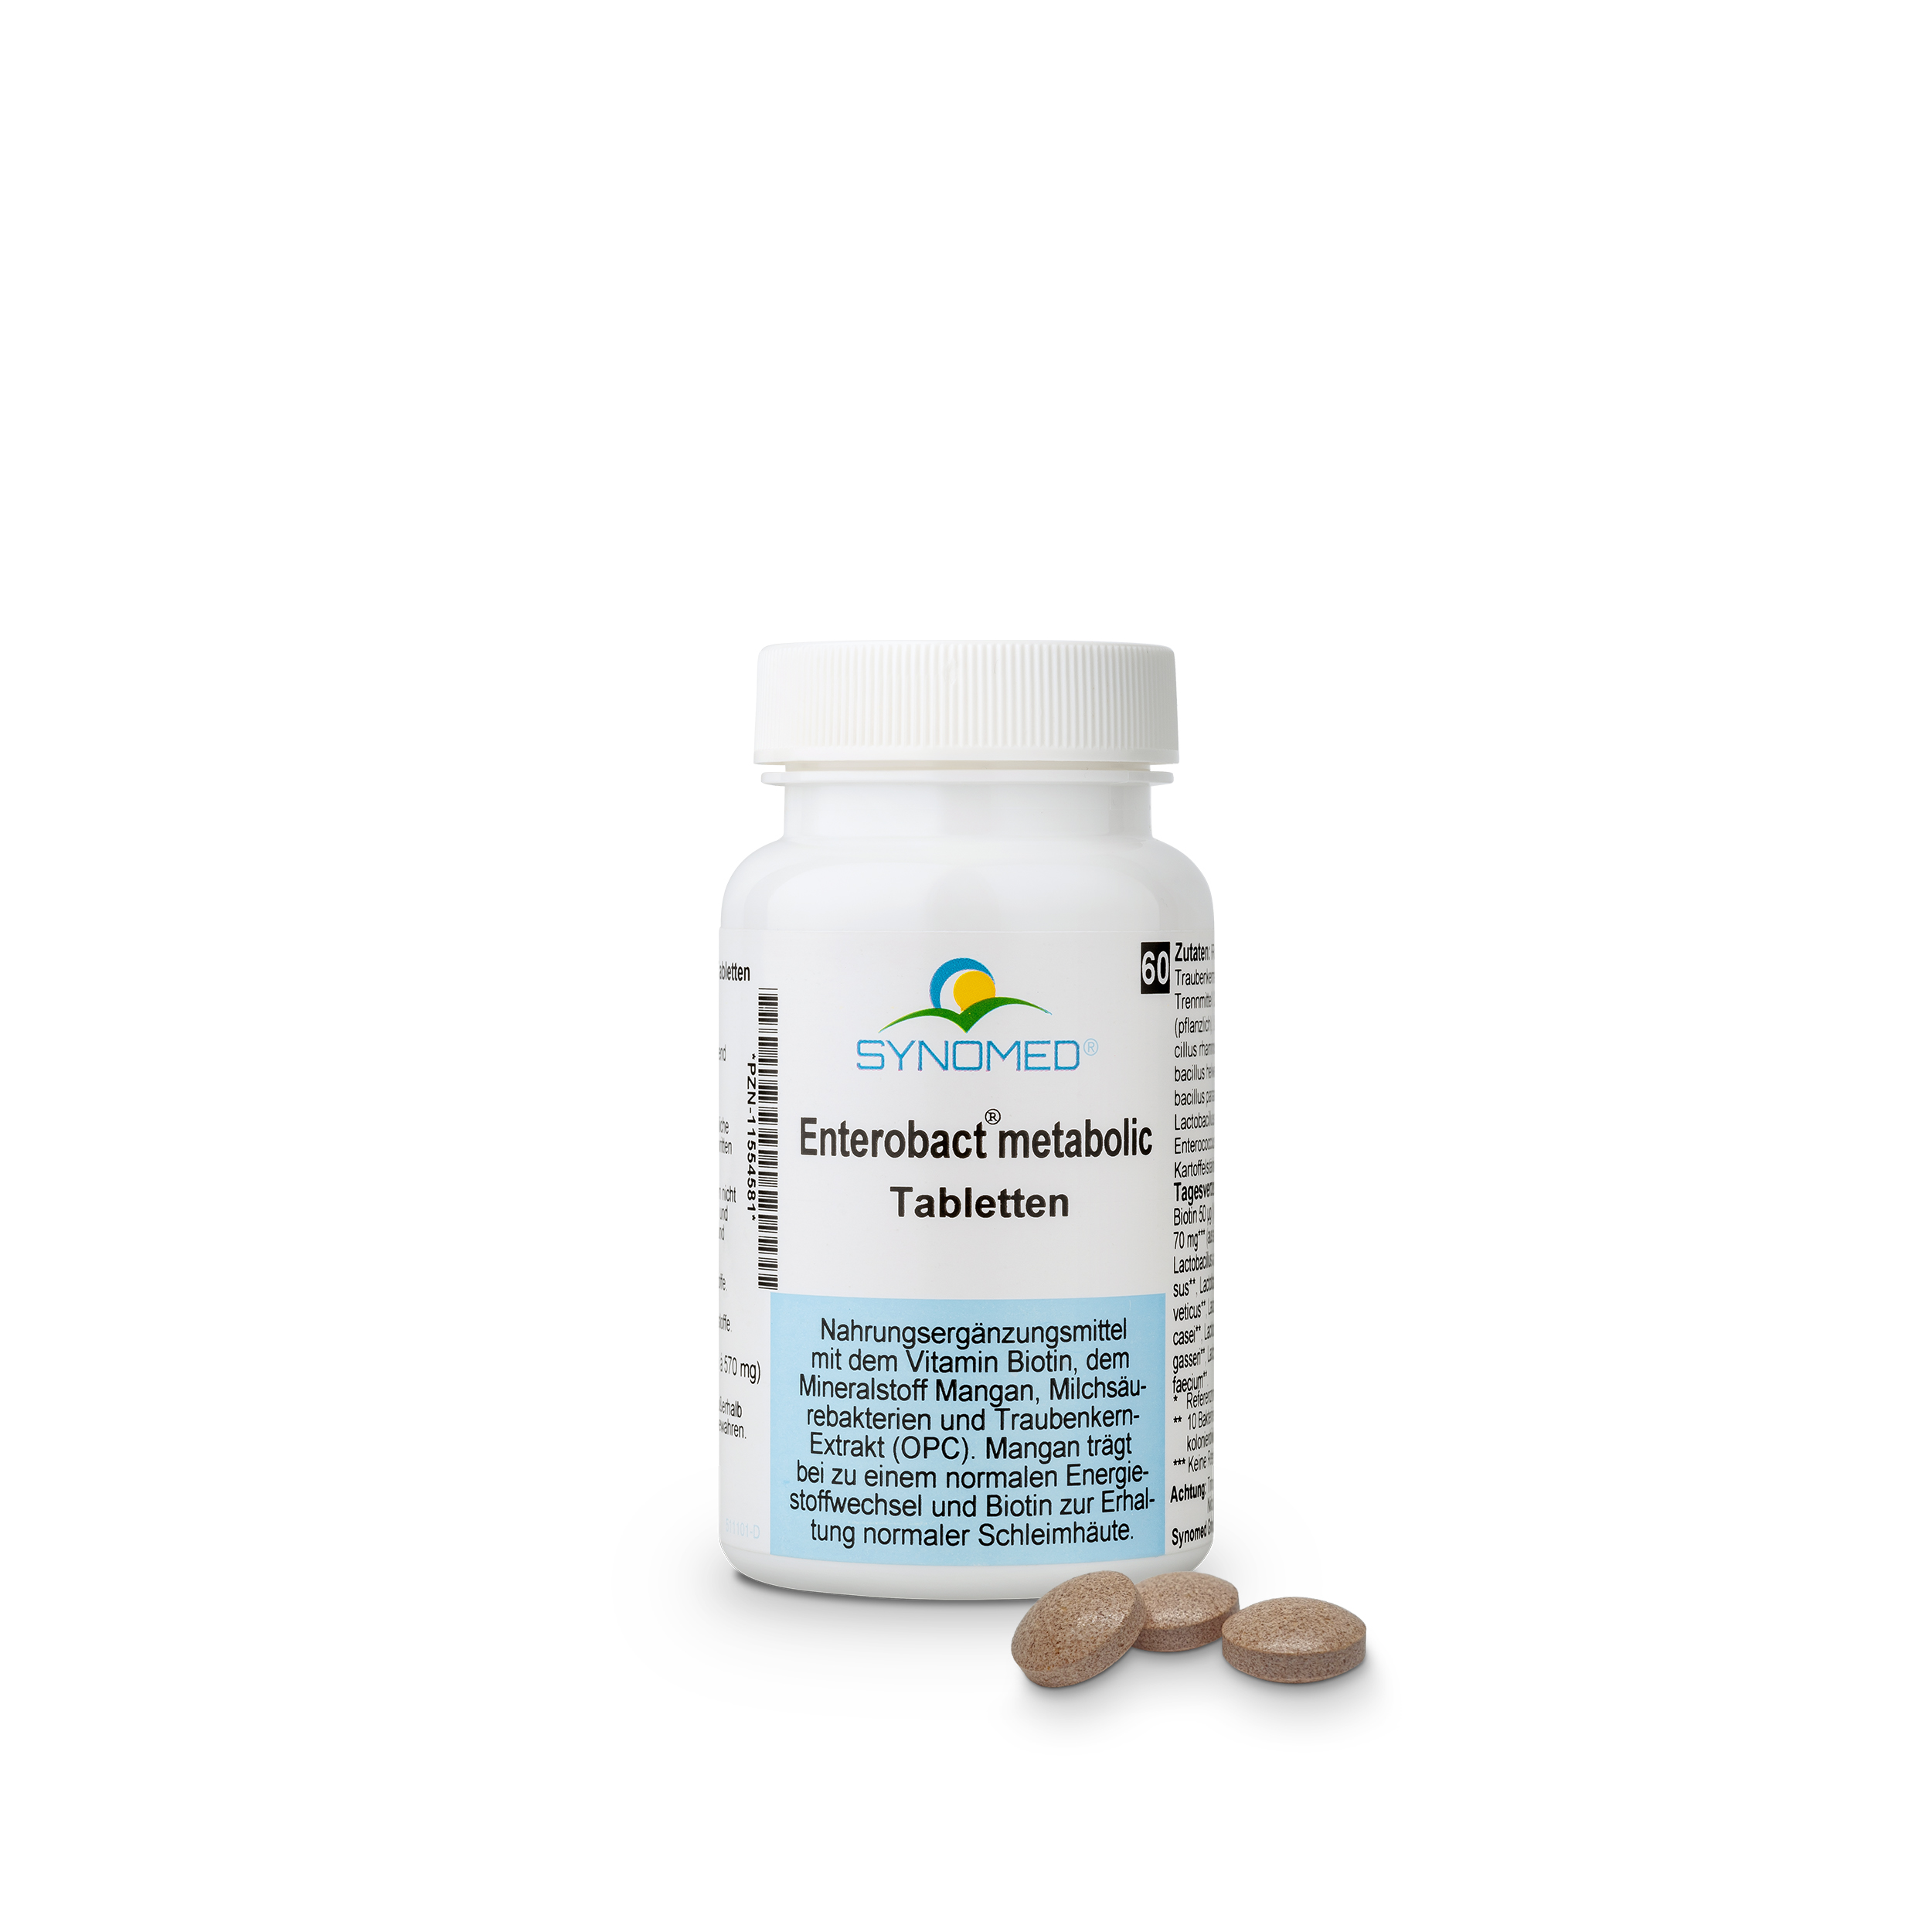 Enterobact ® metabolic Tabletten